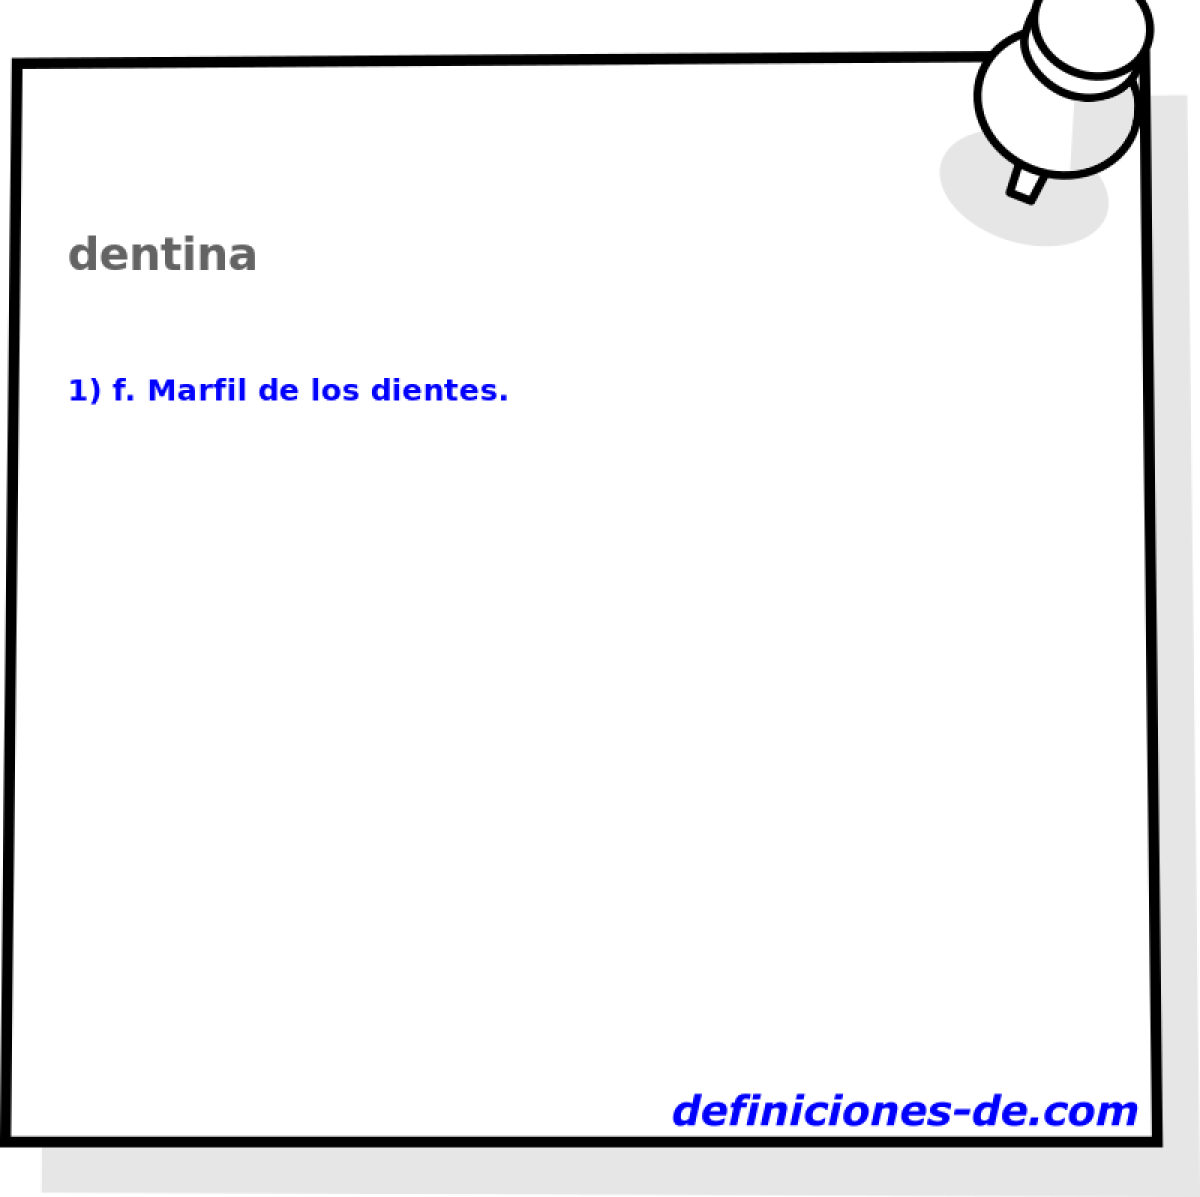 dentina 